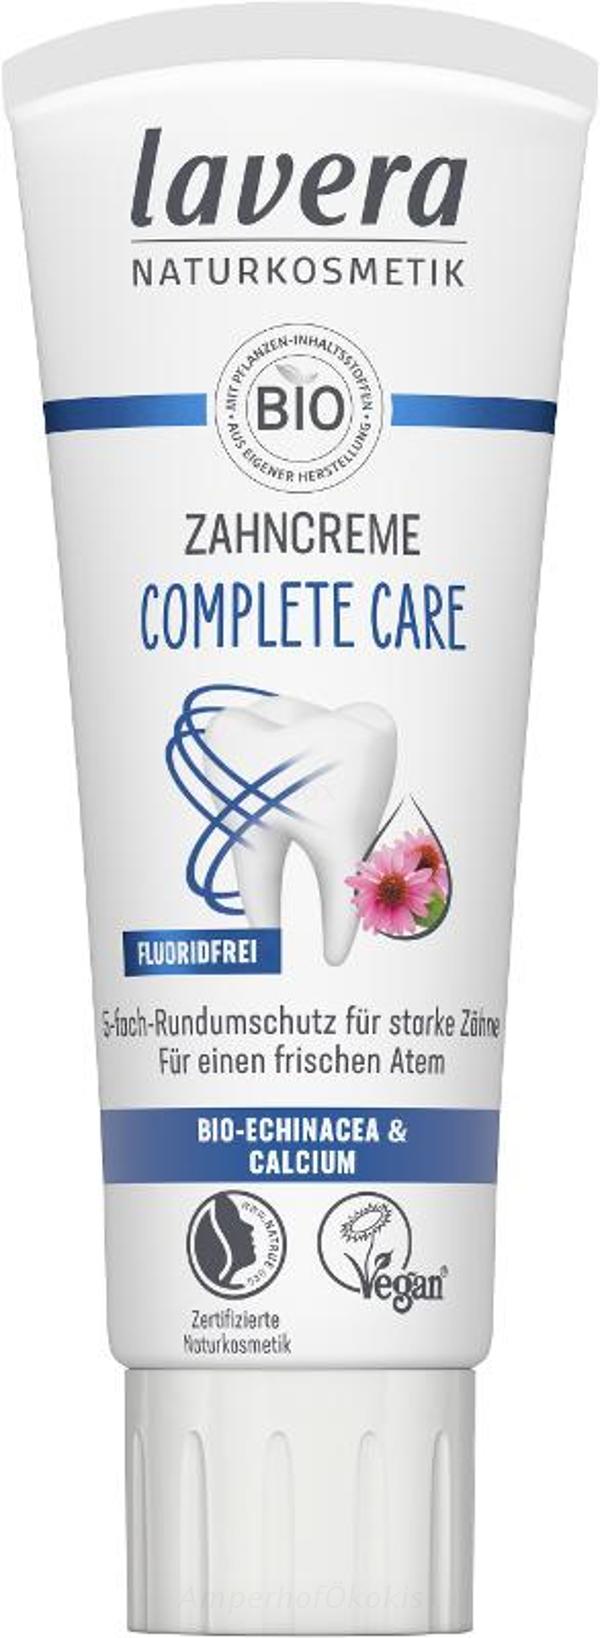 Produktfoto zu Zahncreme Complete Care fluoridfrei 75 ml